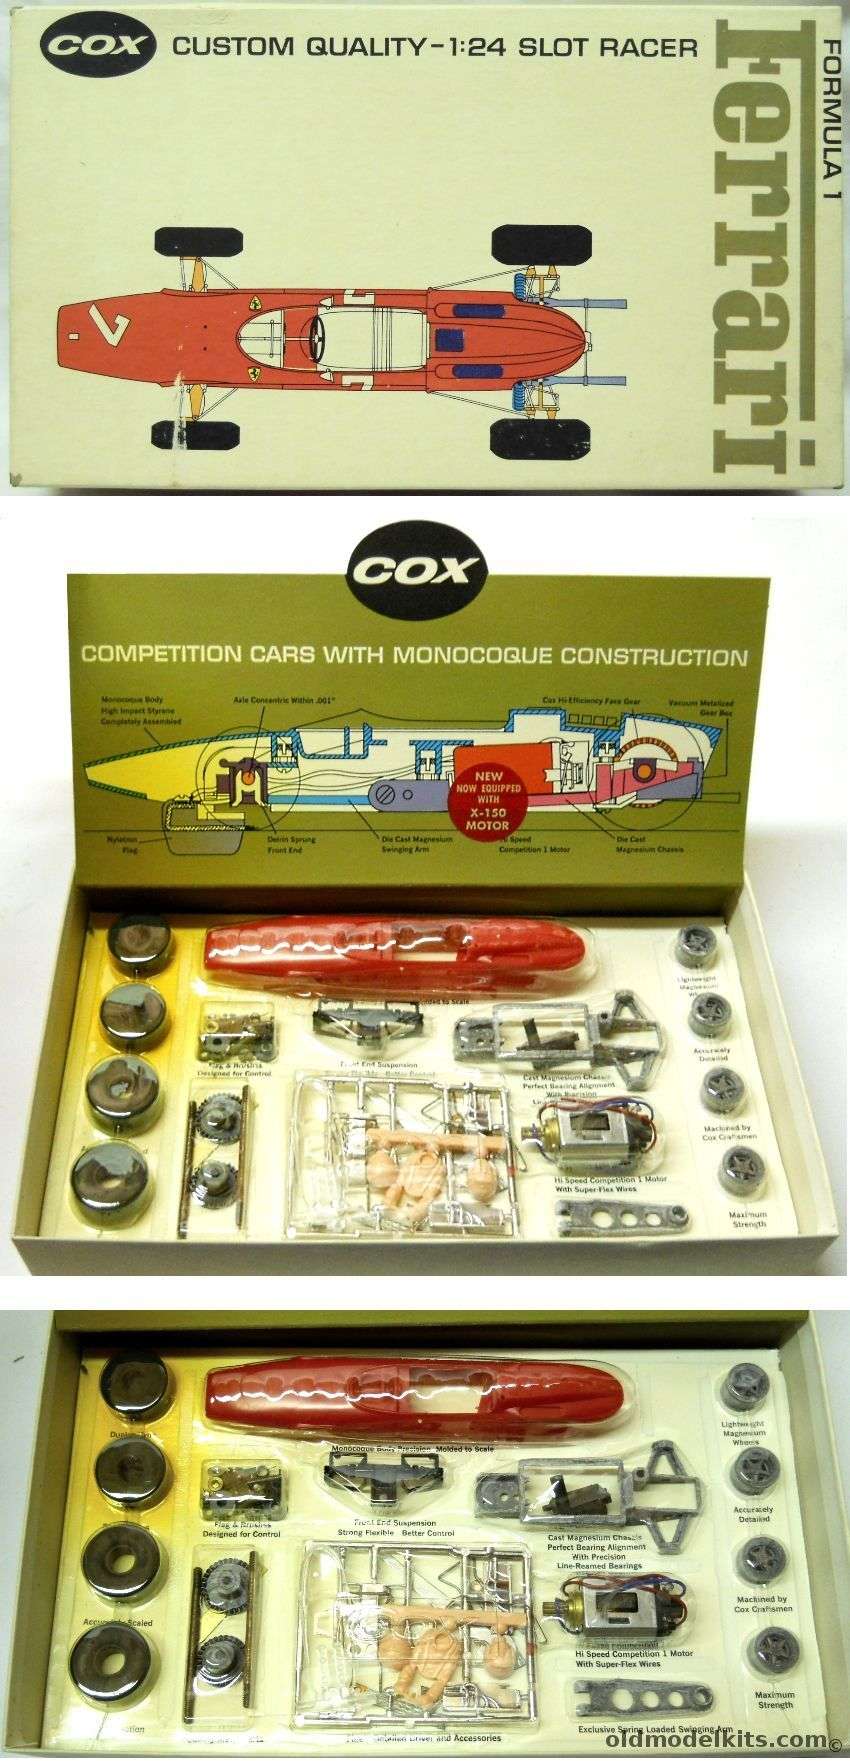 Cox 1/24 1964 Ferrari Formula 1 Slot Car - With X-150 Motor, 9400-798 plastic model kit